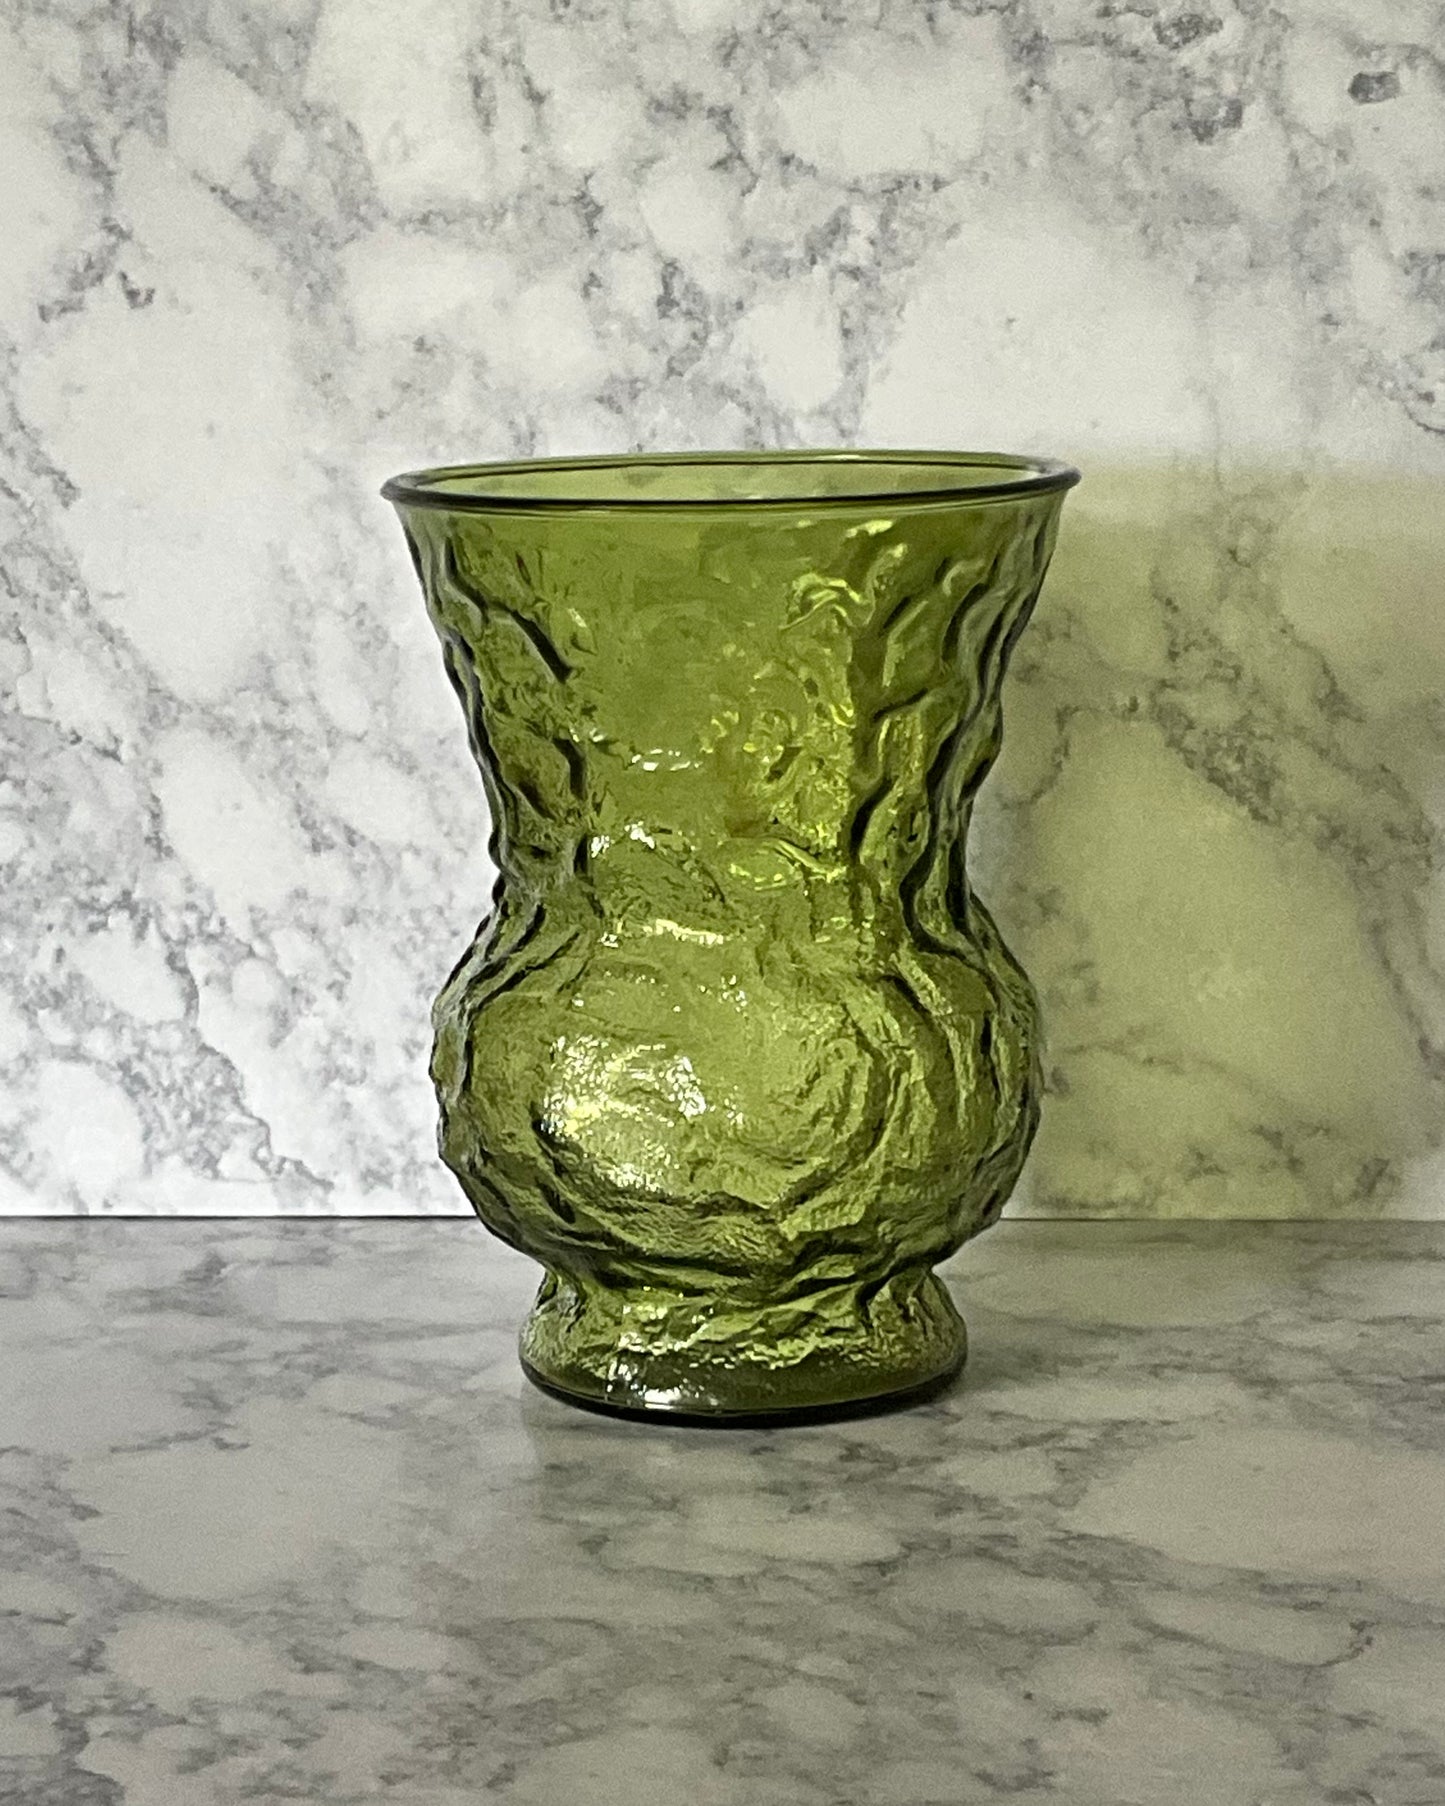 E.O. Brody Co. Green Crinkle Bulb Vase